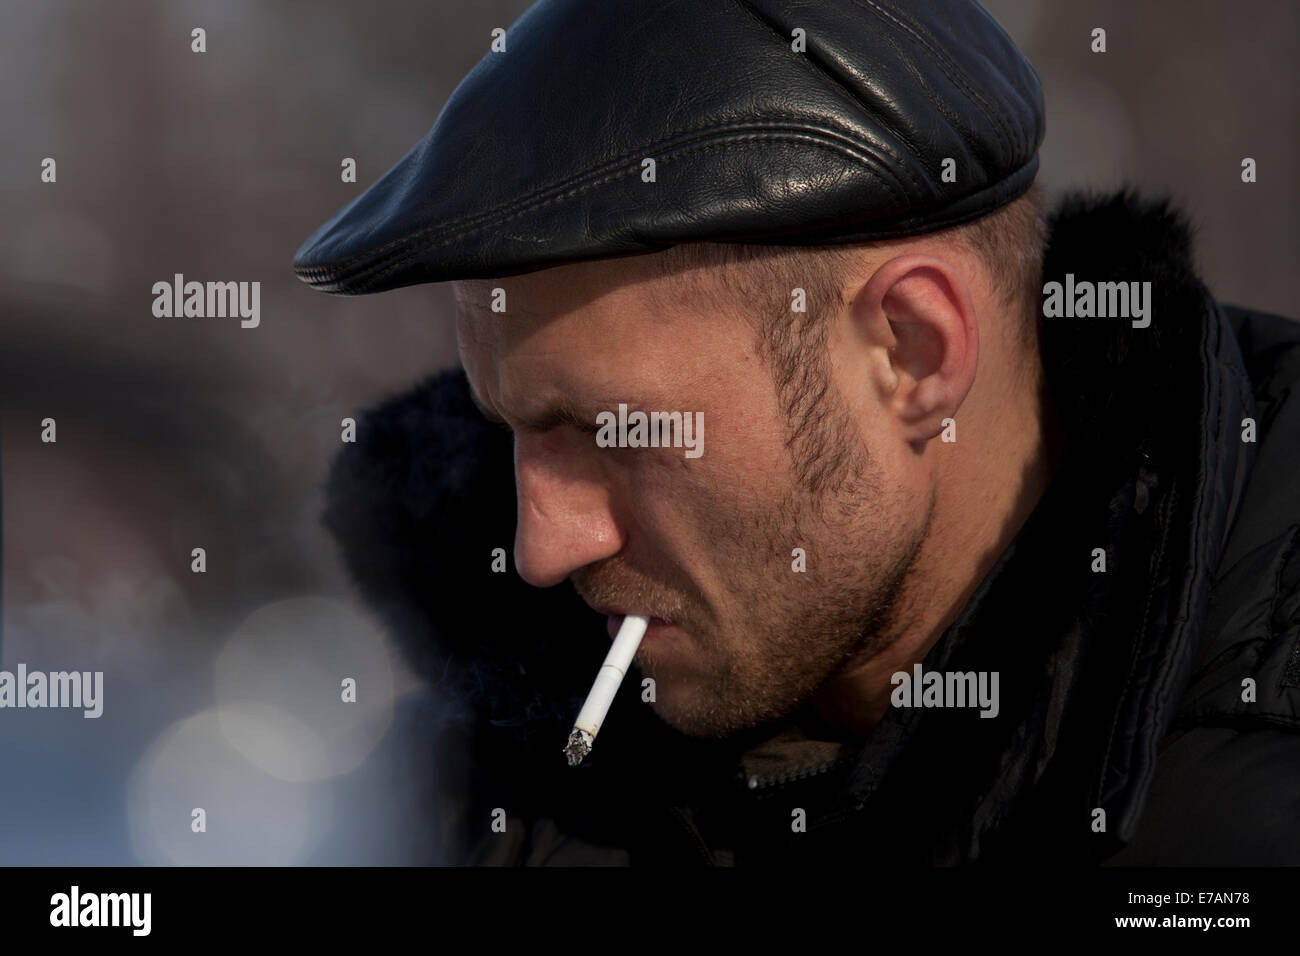 cool russian man smoking leather cap Stock Photo